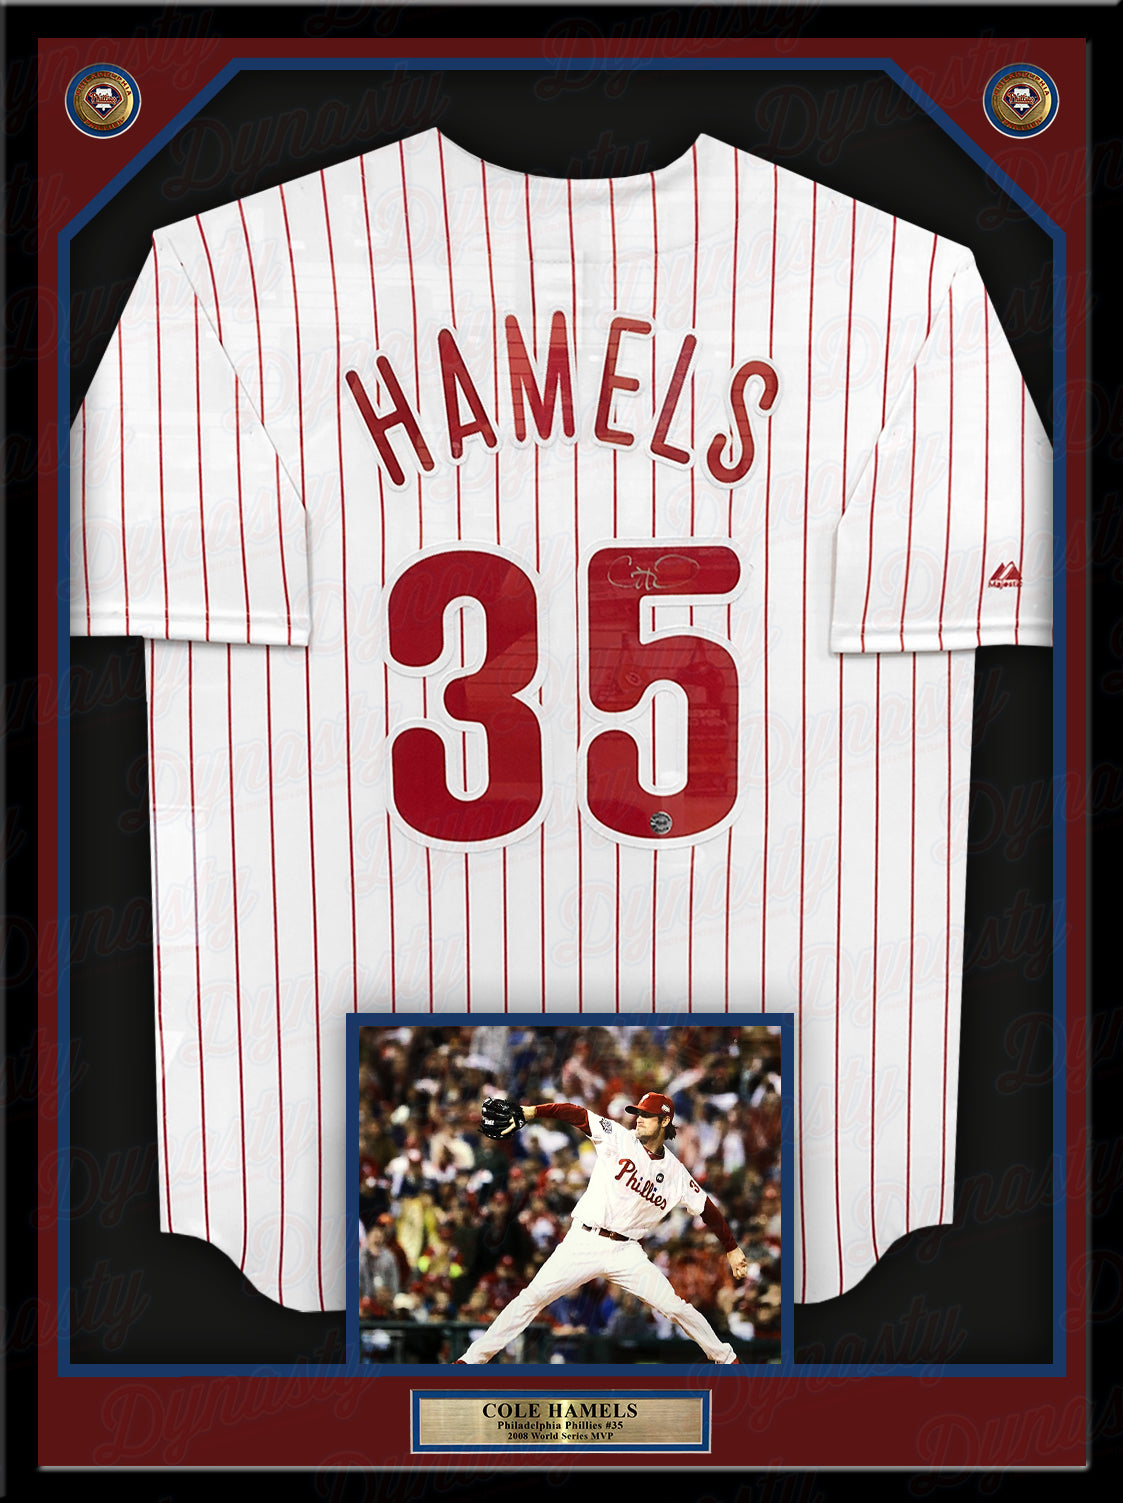 Cole Hamels Signed 16x20 Philadelphia Phillies Photo 08 WS MVP